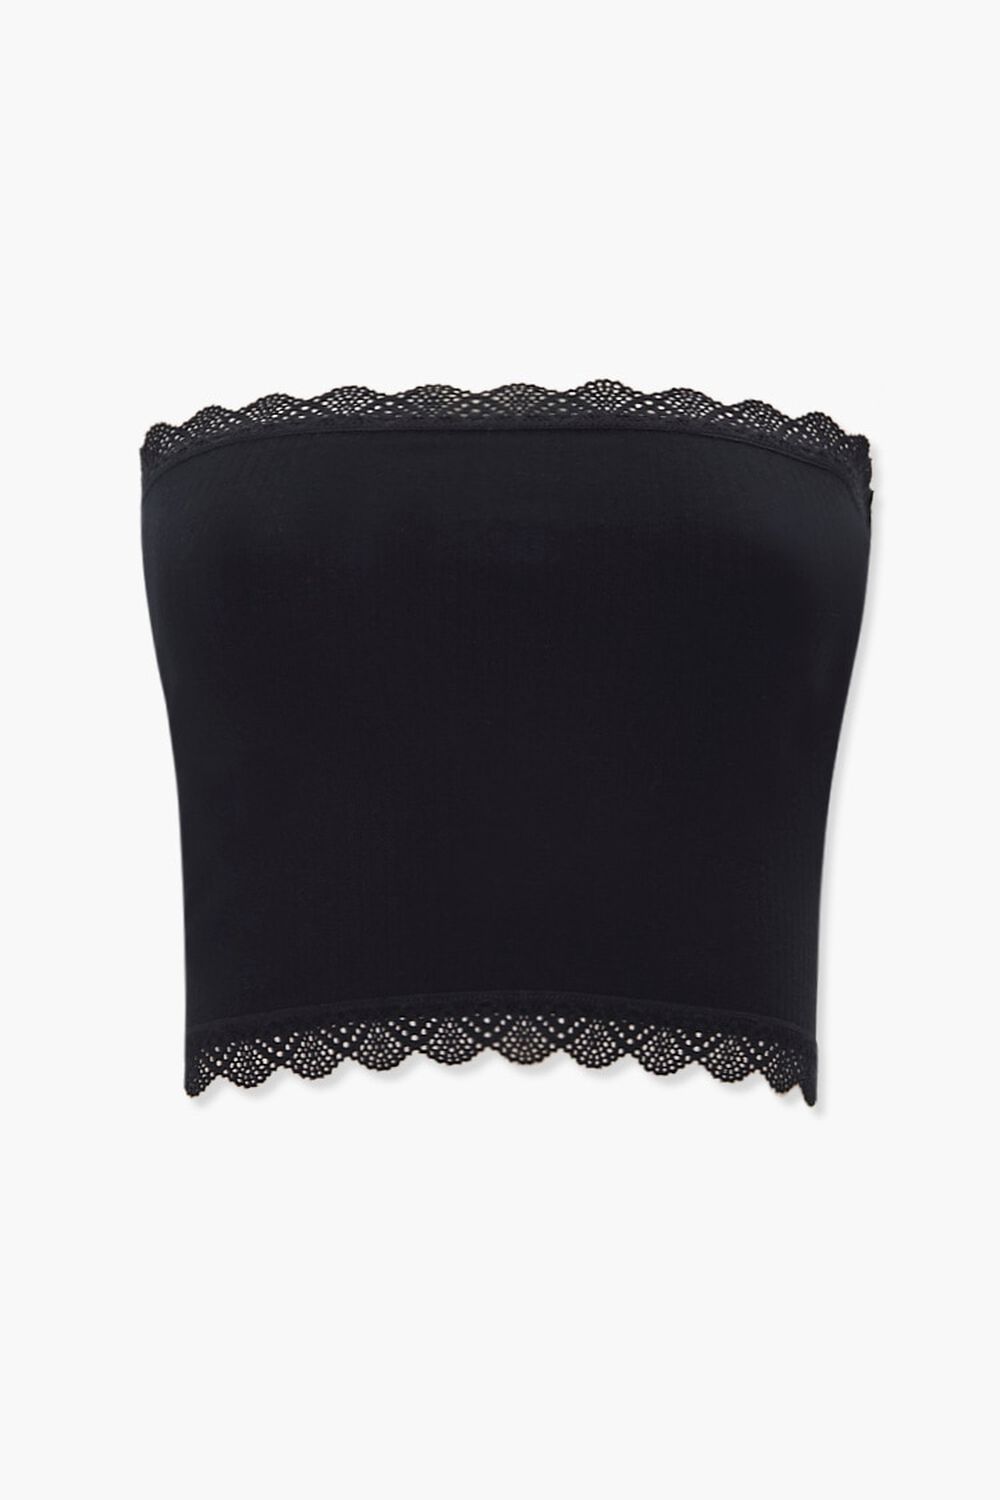 BLACK Ribbed Crochet-Trim Tube Top, image 1